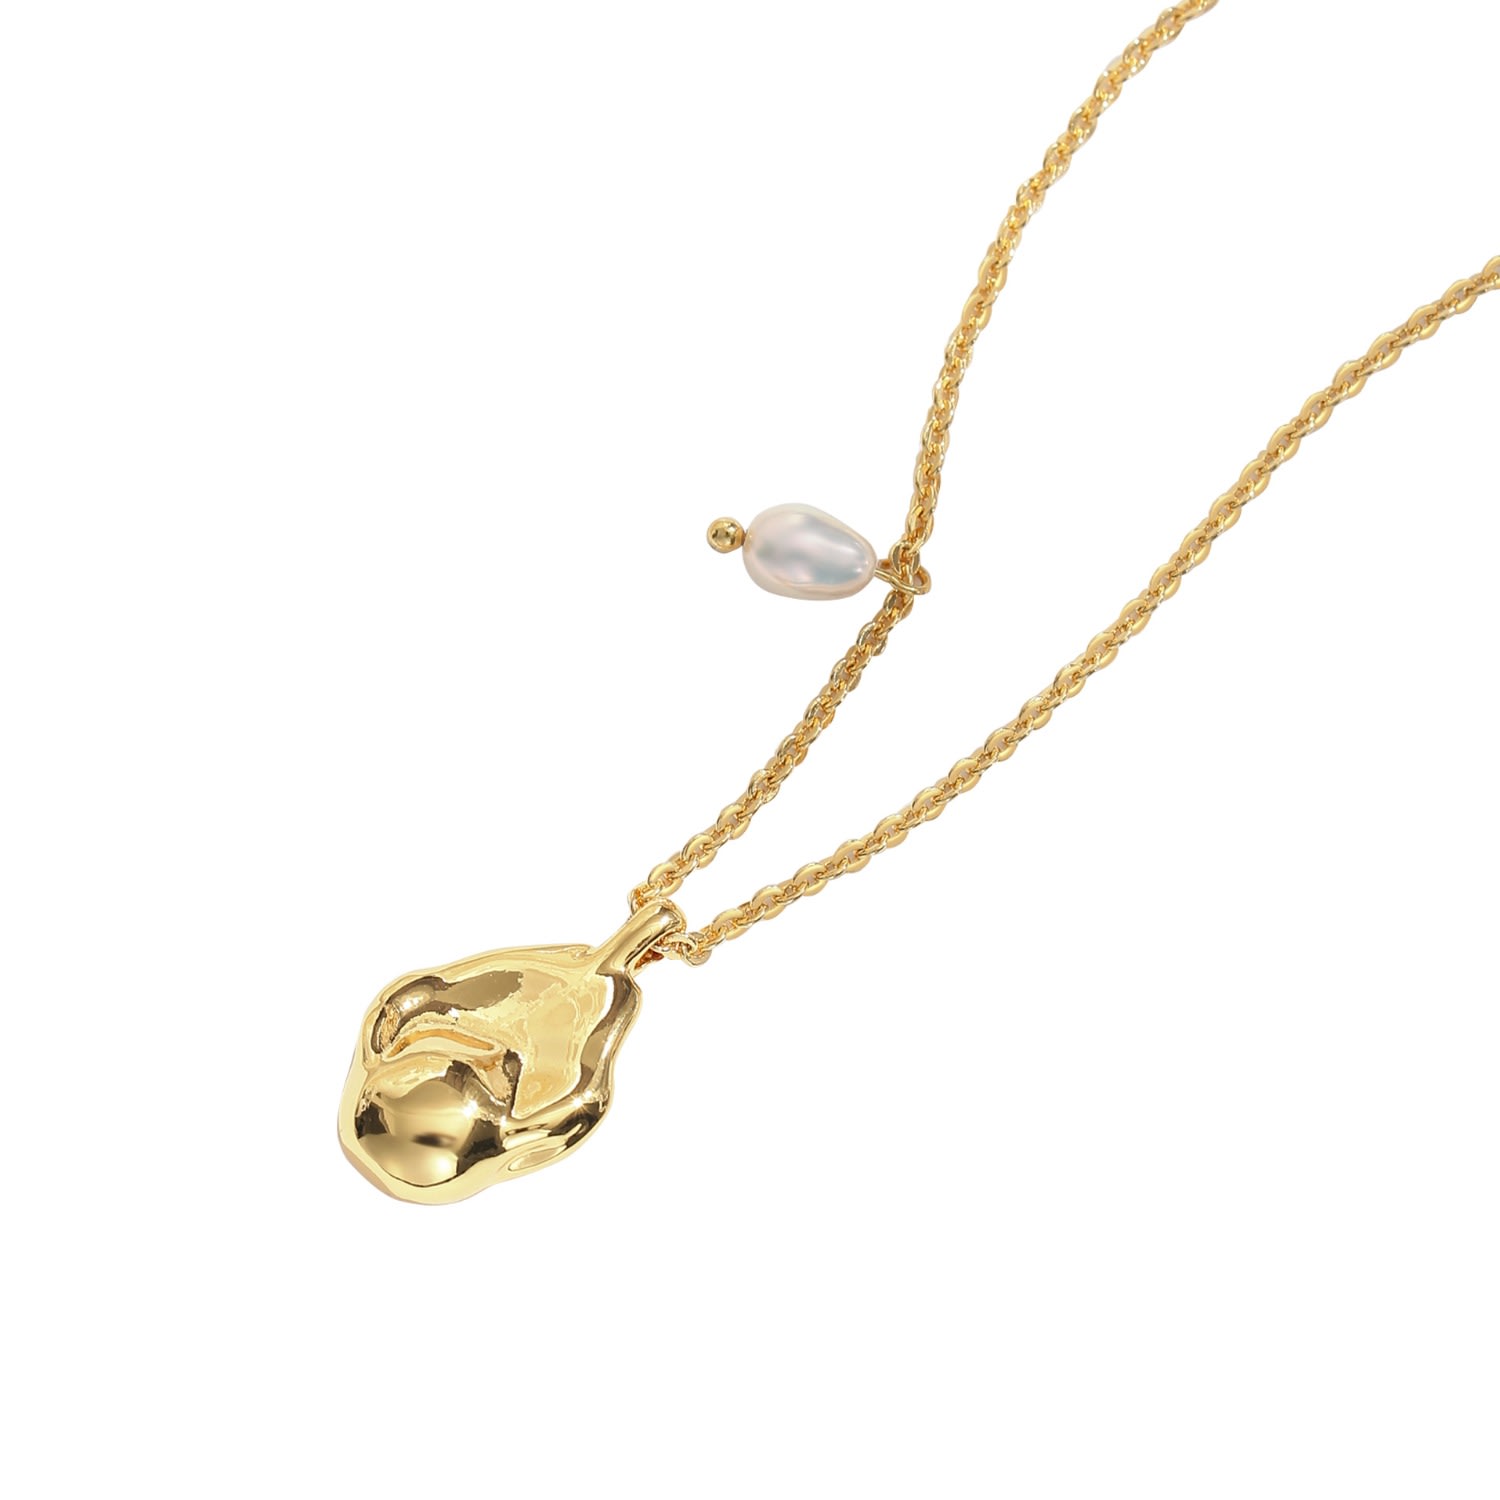 Shop Classicharms Women's Gold Baroque Pendant & Pearl Necklace